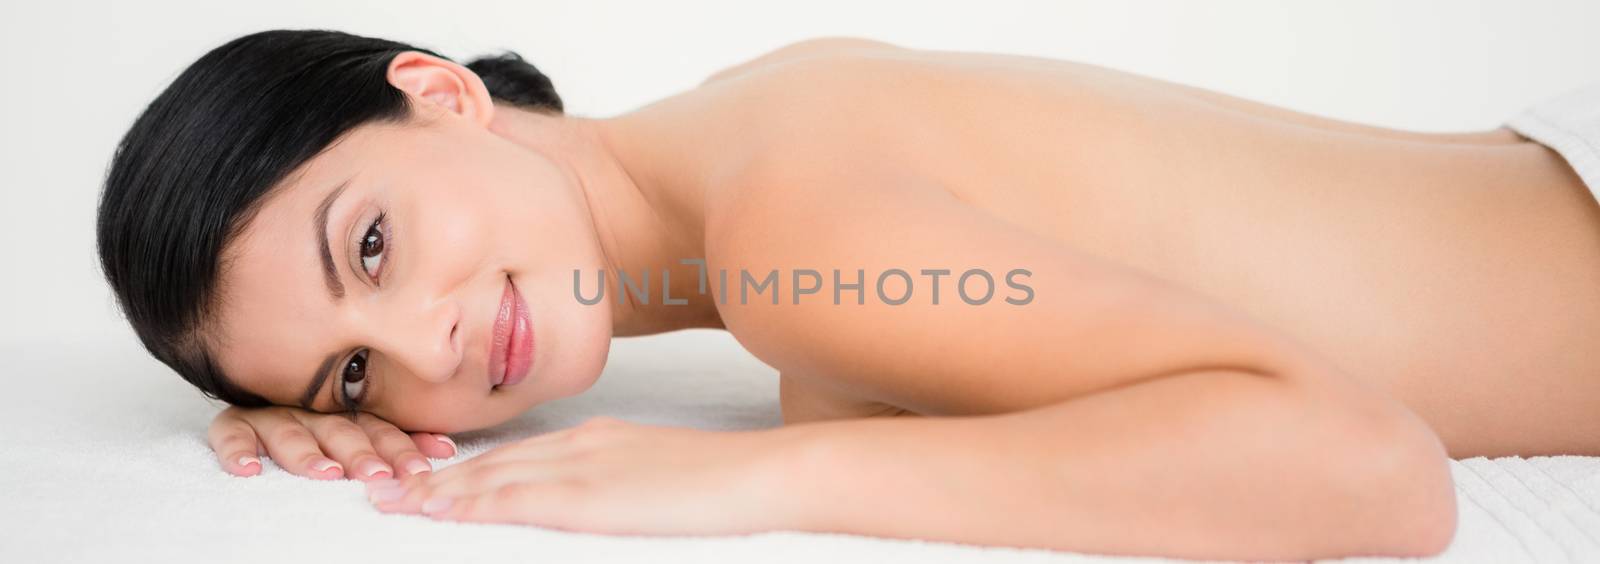 Pretty brunette enjoying a massage at camera by Wavebreakmedia